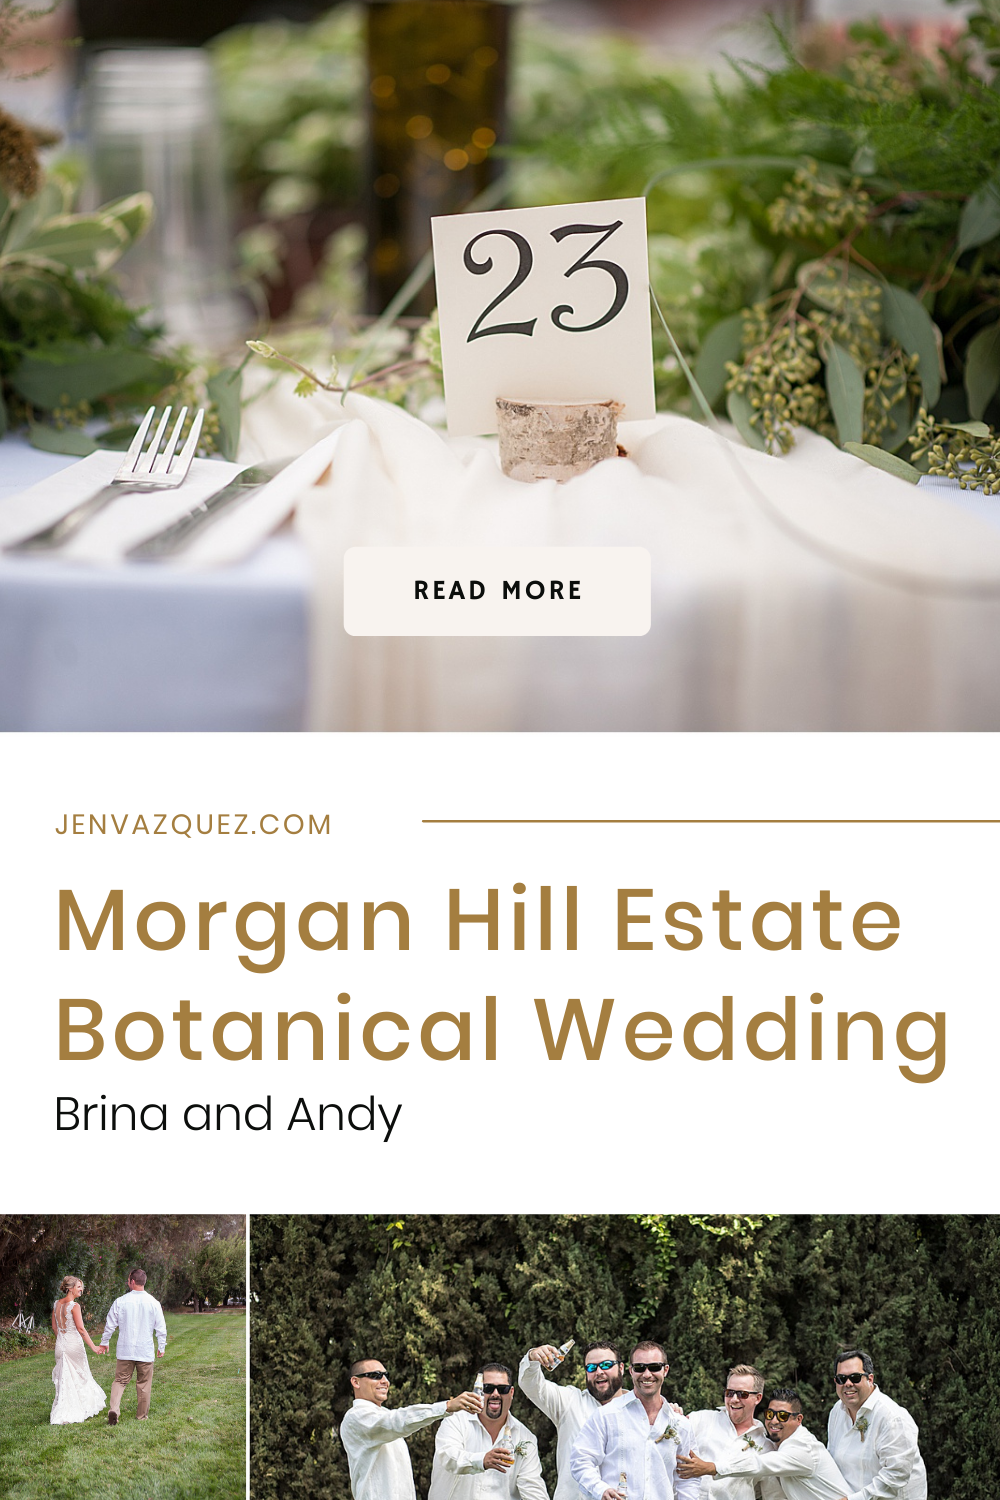 Morgan Hill Estate Botanical Wedding - Brina and Andy by Jen Vazquez 